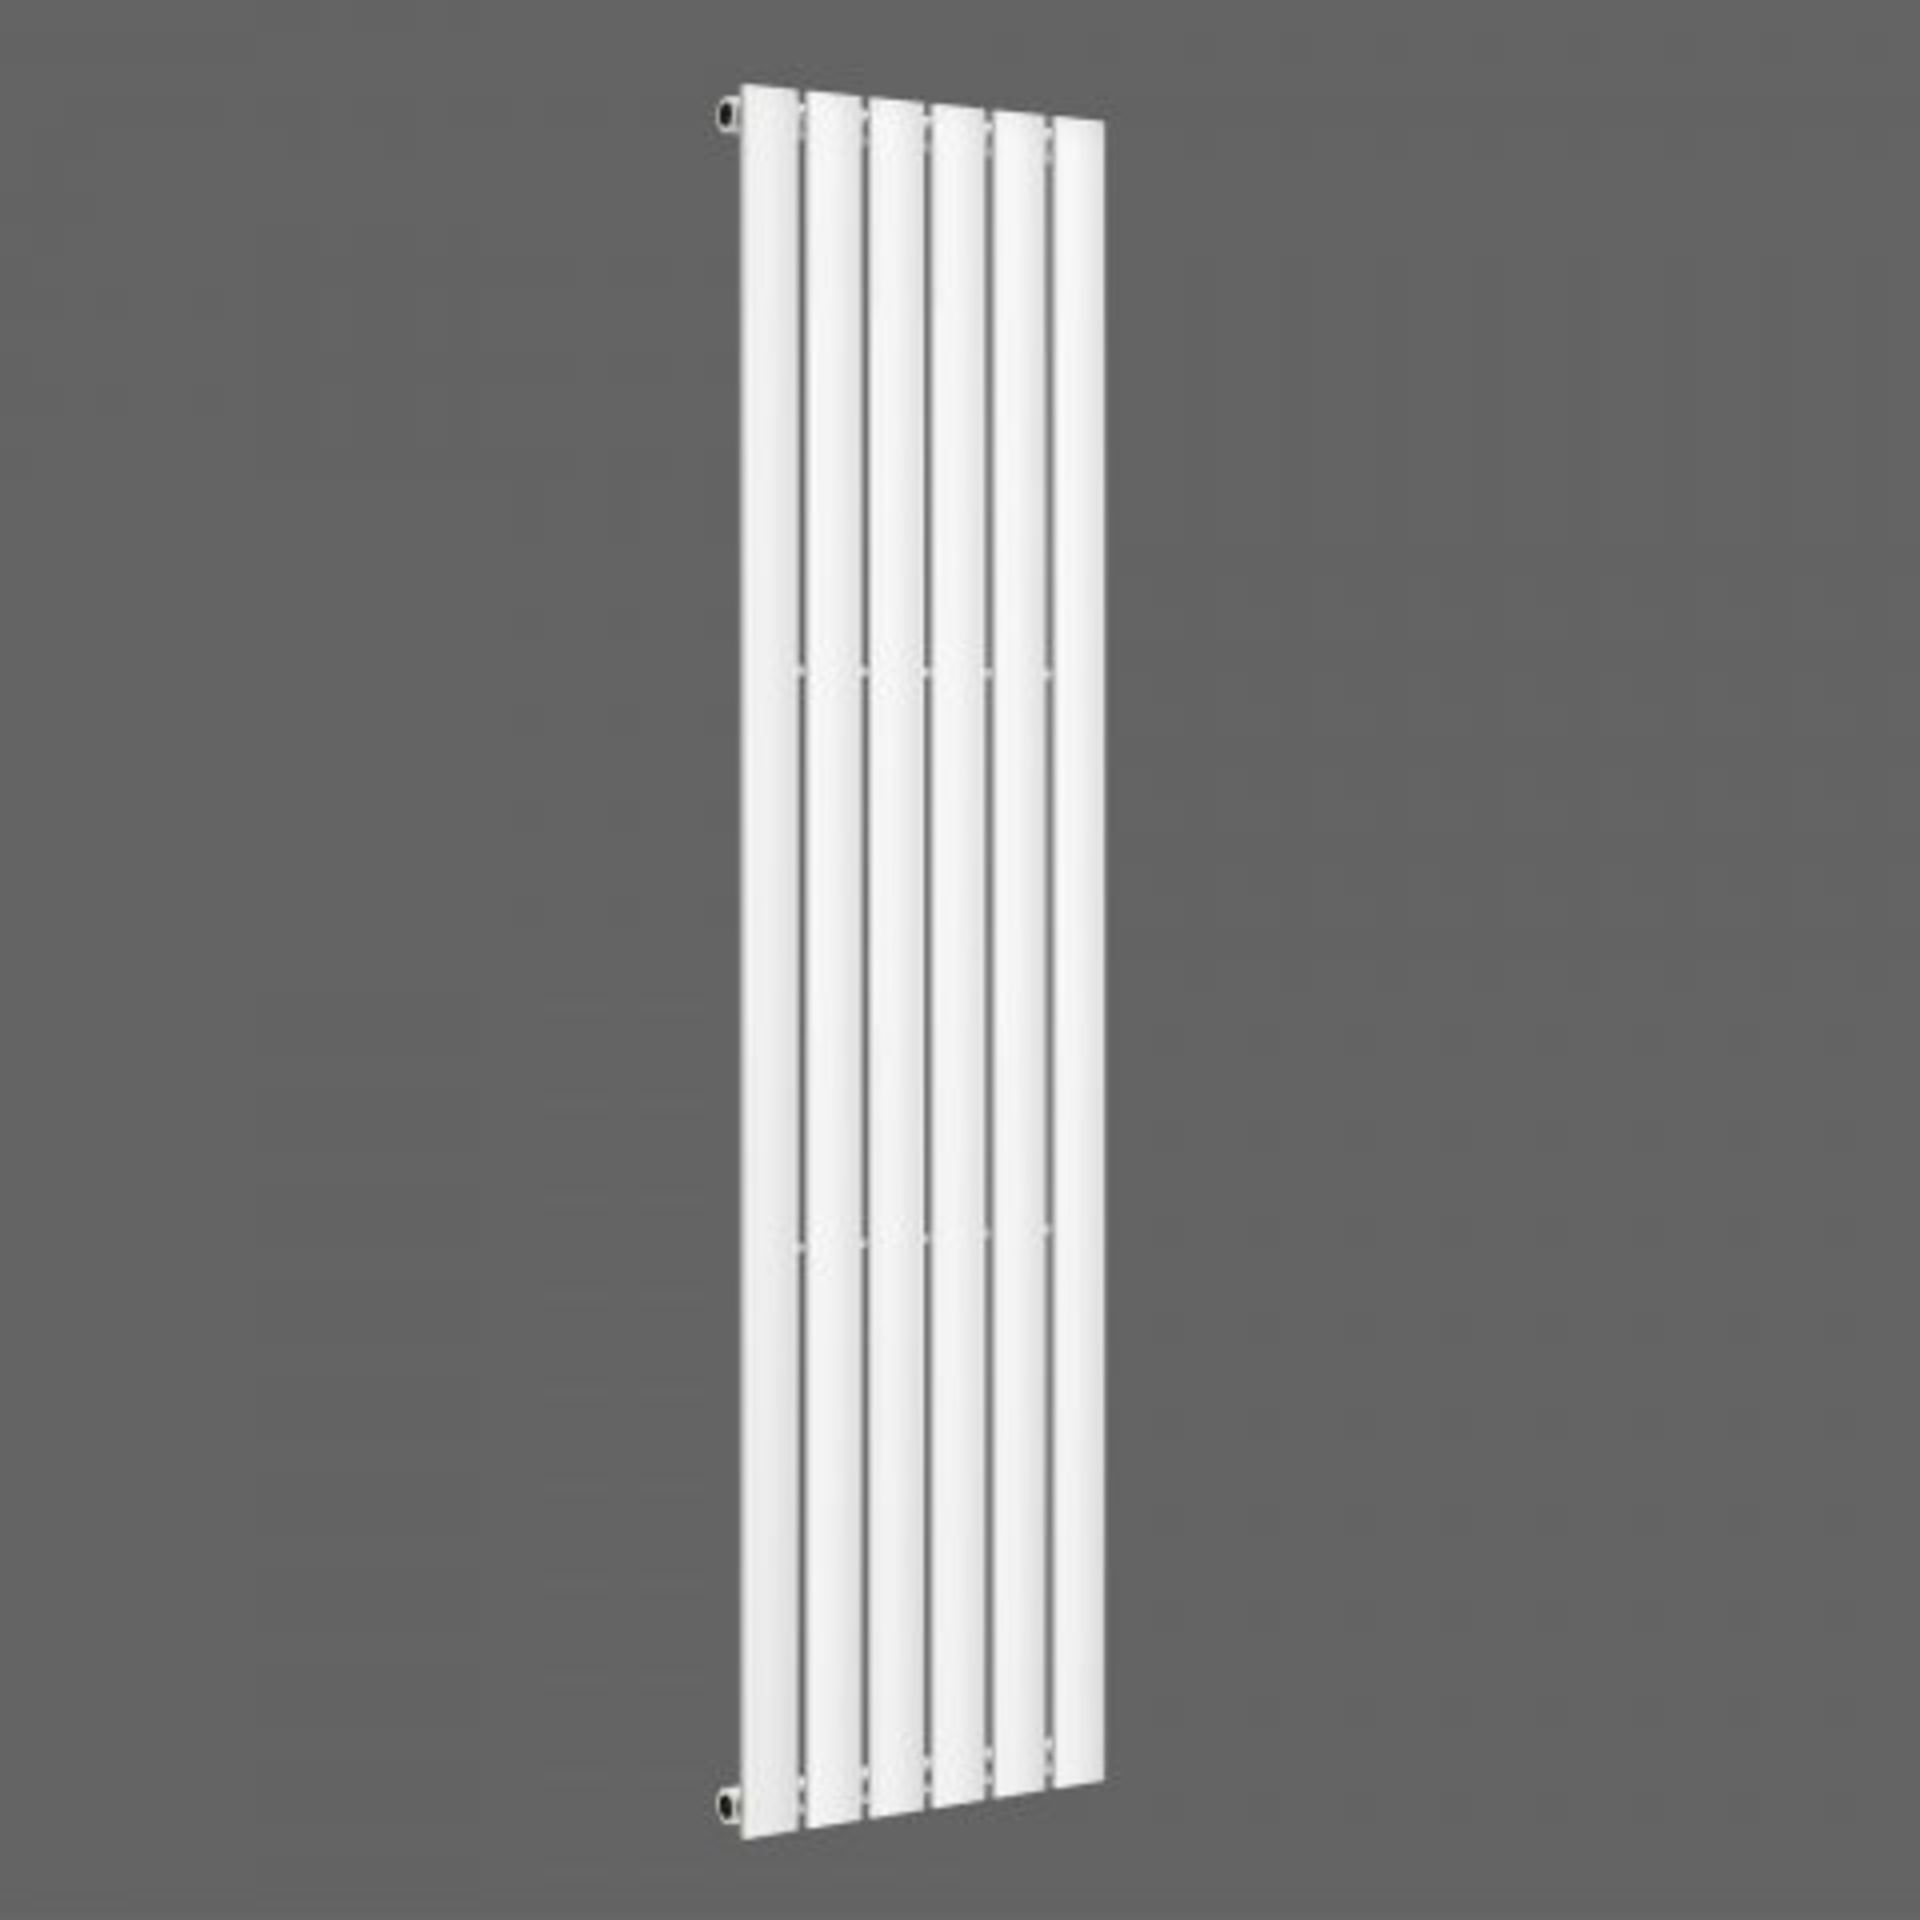 (C37) 1800x452mm Gloss White Single Flat Panel Vertical Radiator -Thera Range. RRP £255.98. Designer - Image 3 of 3